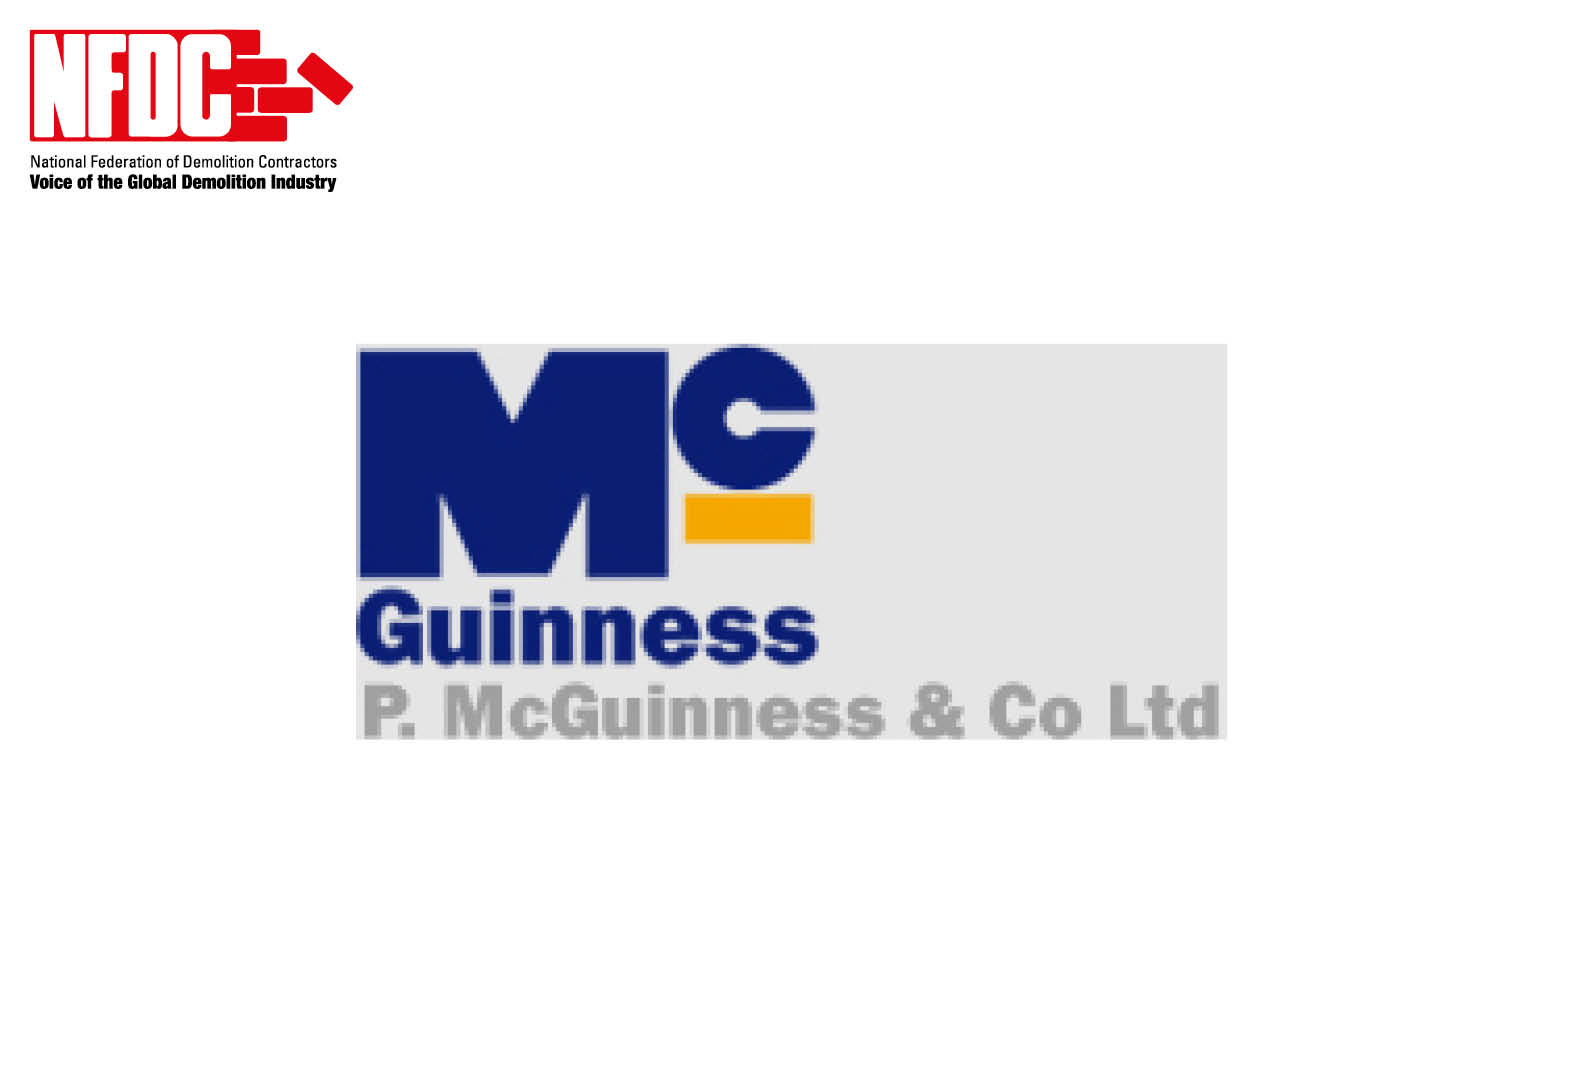 P McGuinness & Co Ltd